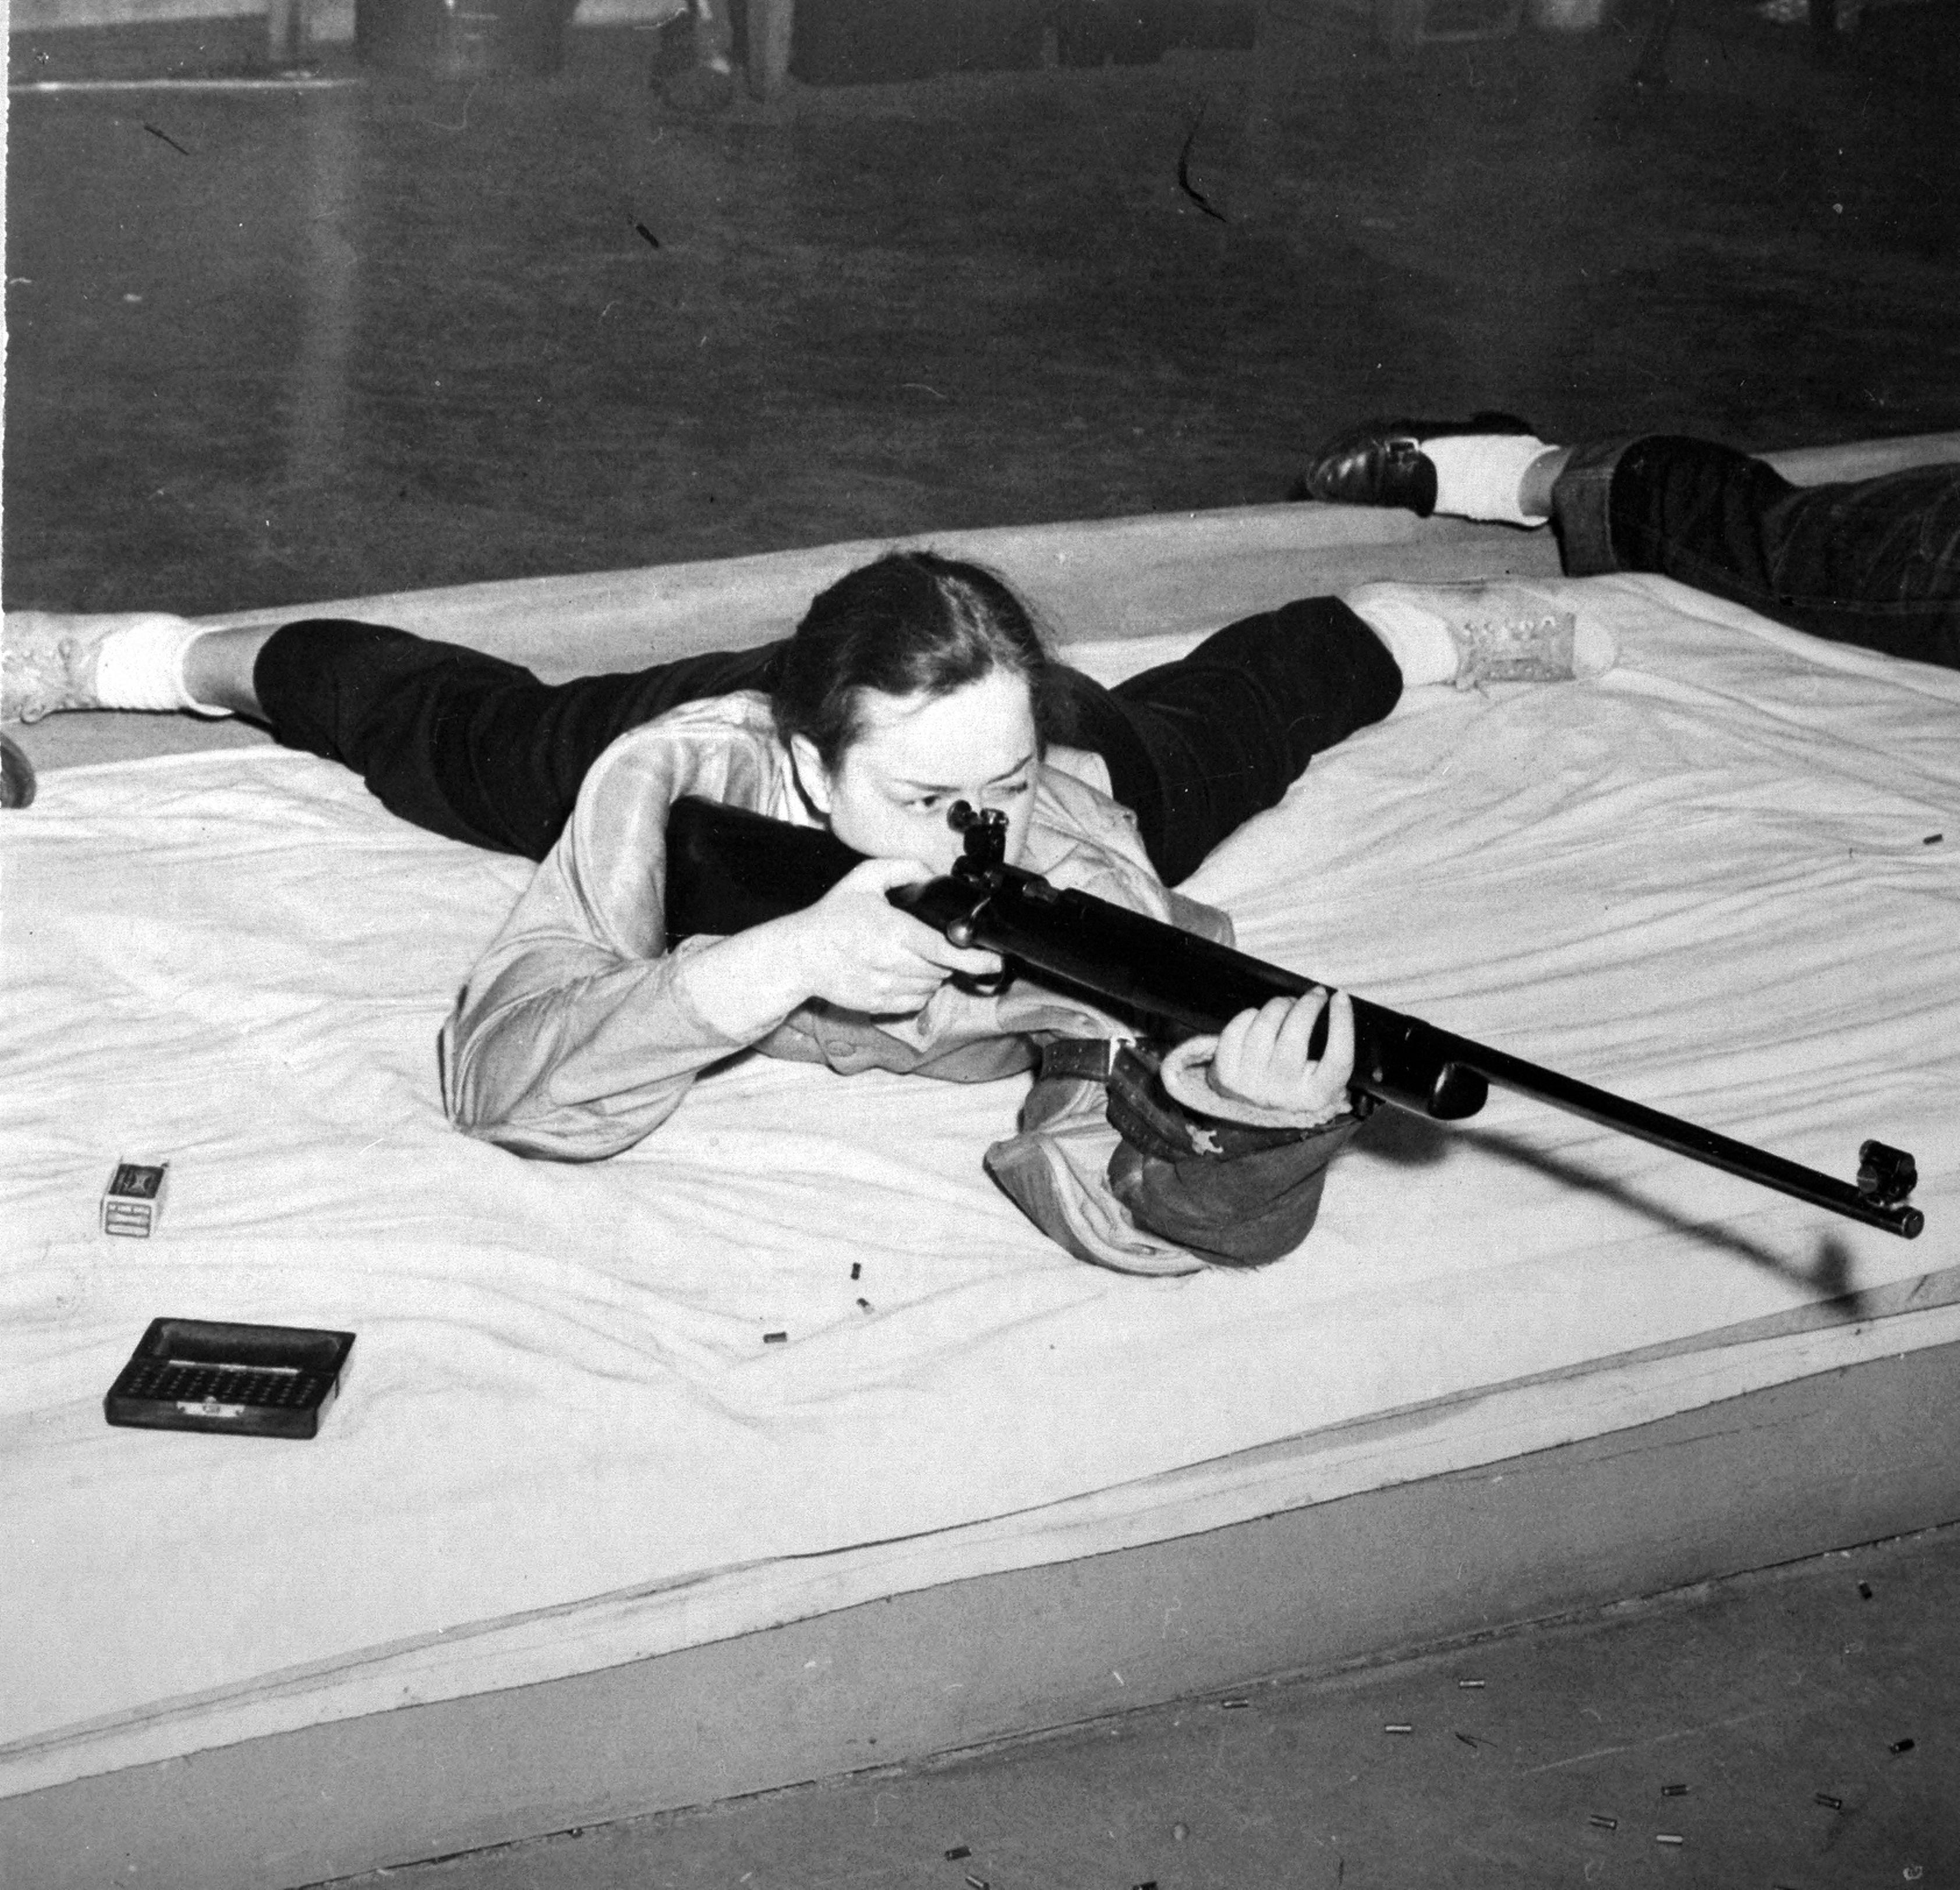 Rifle practice, circa 1950